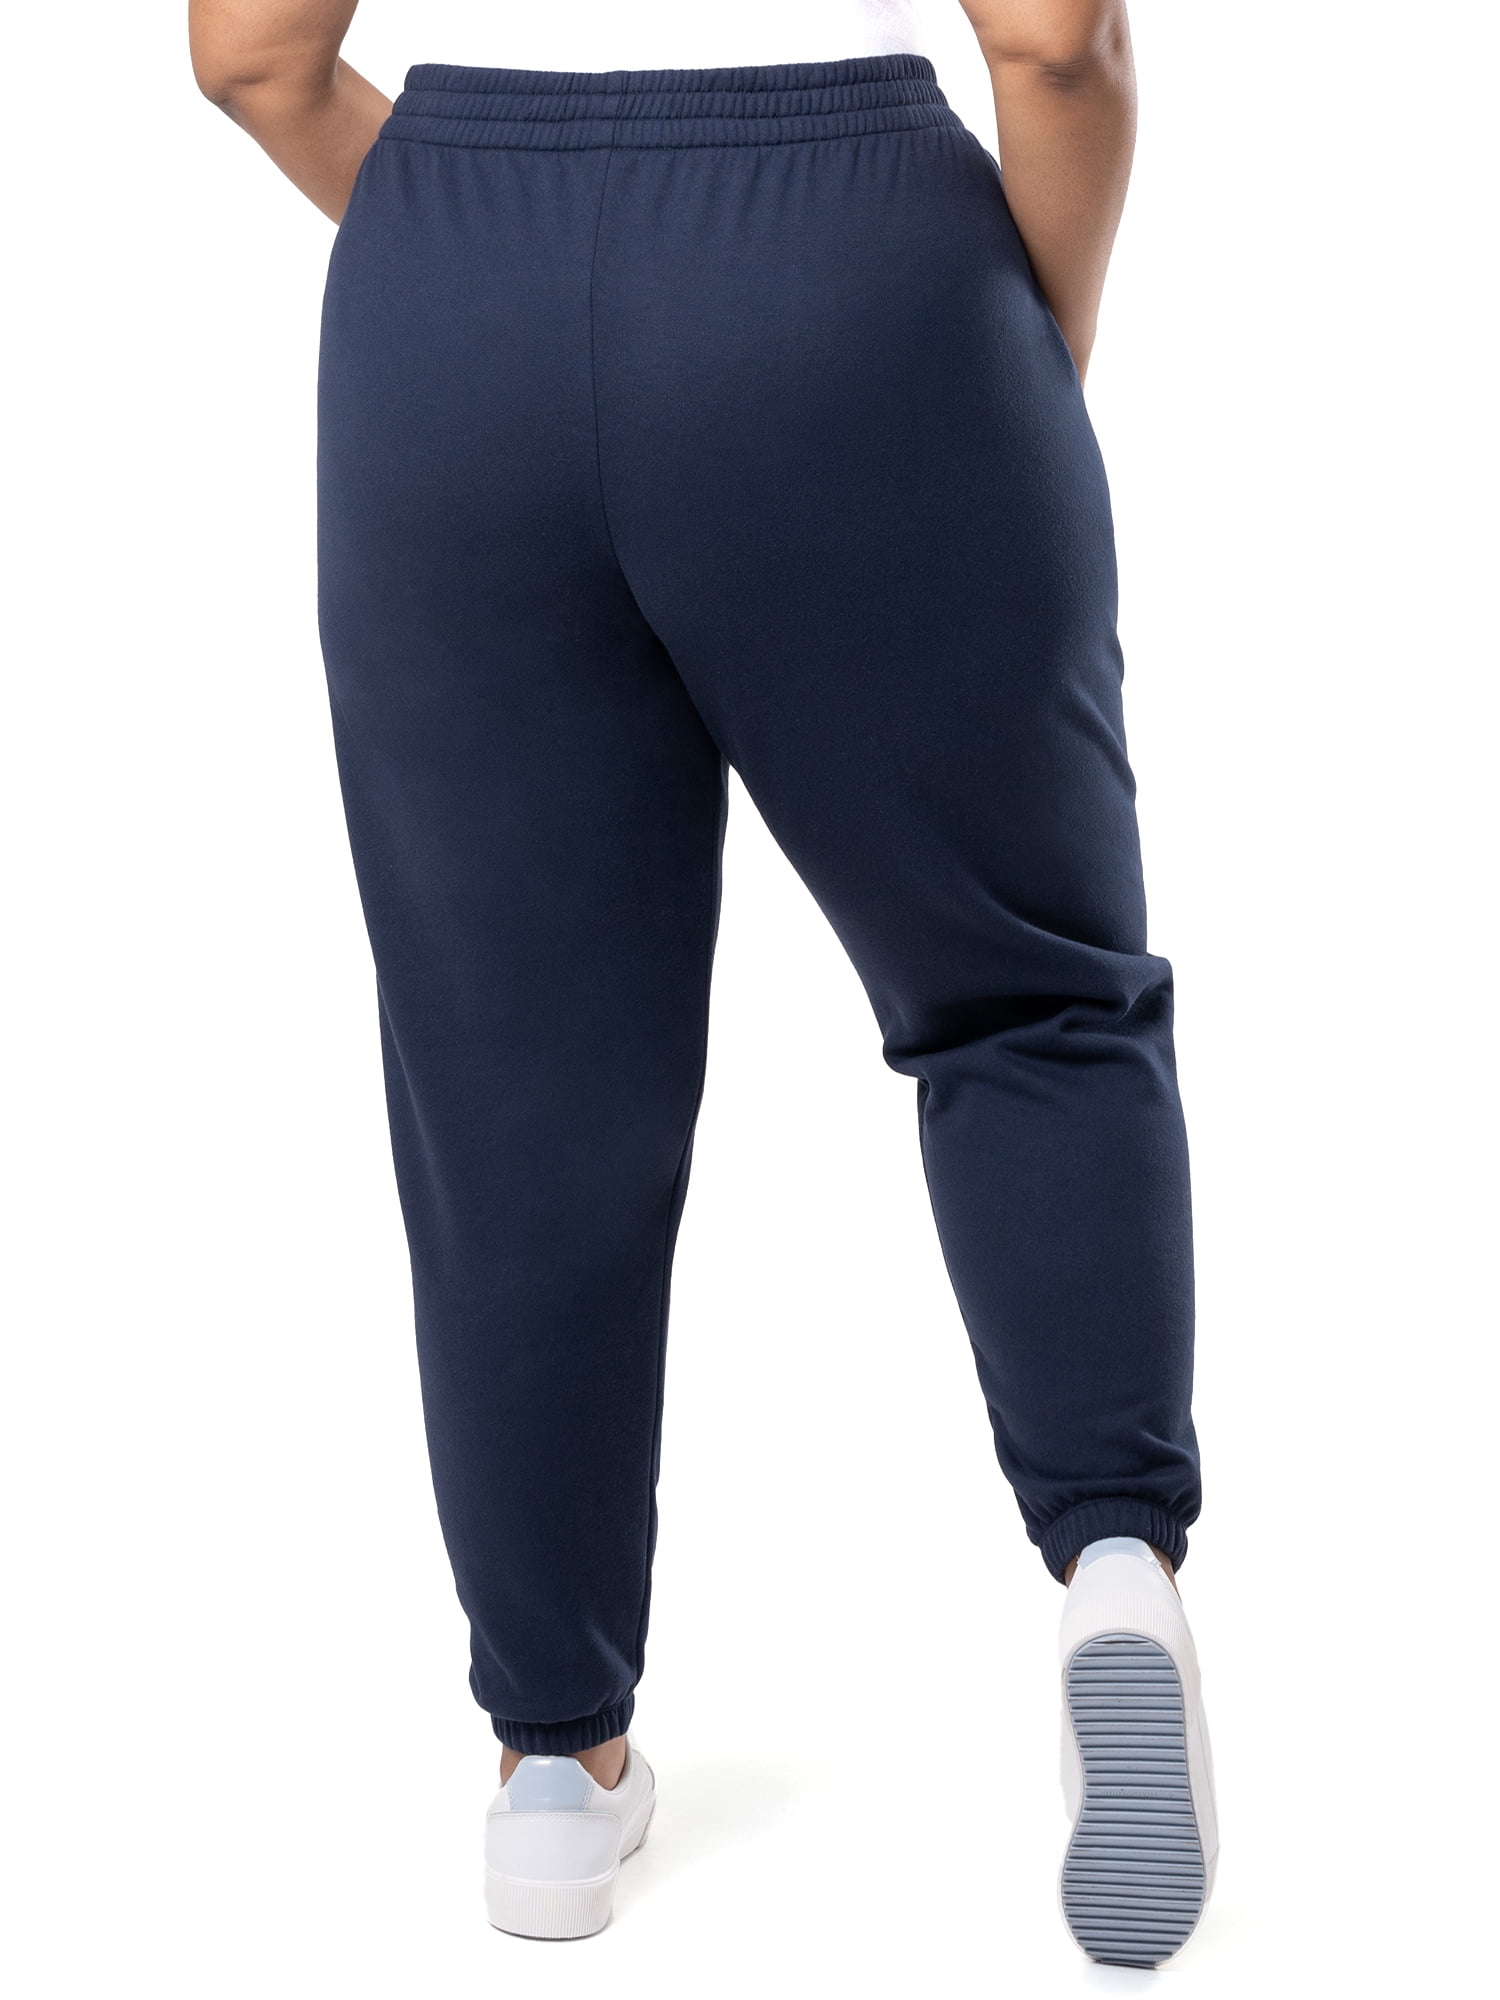 Terra & Sky Women's Plus Size Cotton Blend Fleece Sweatpants, 2